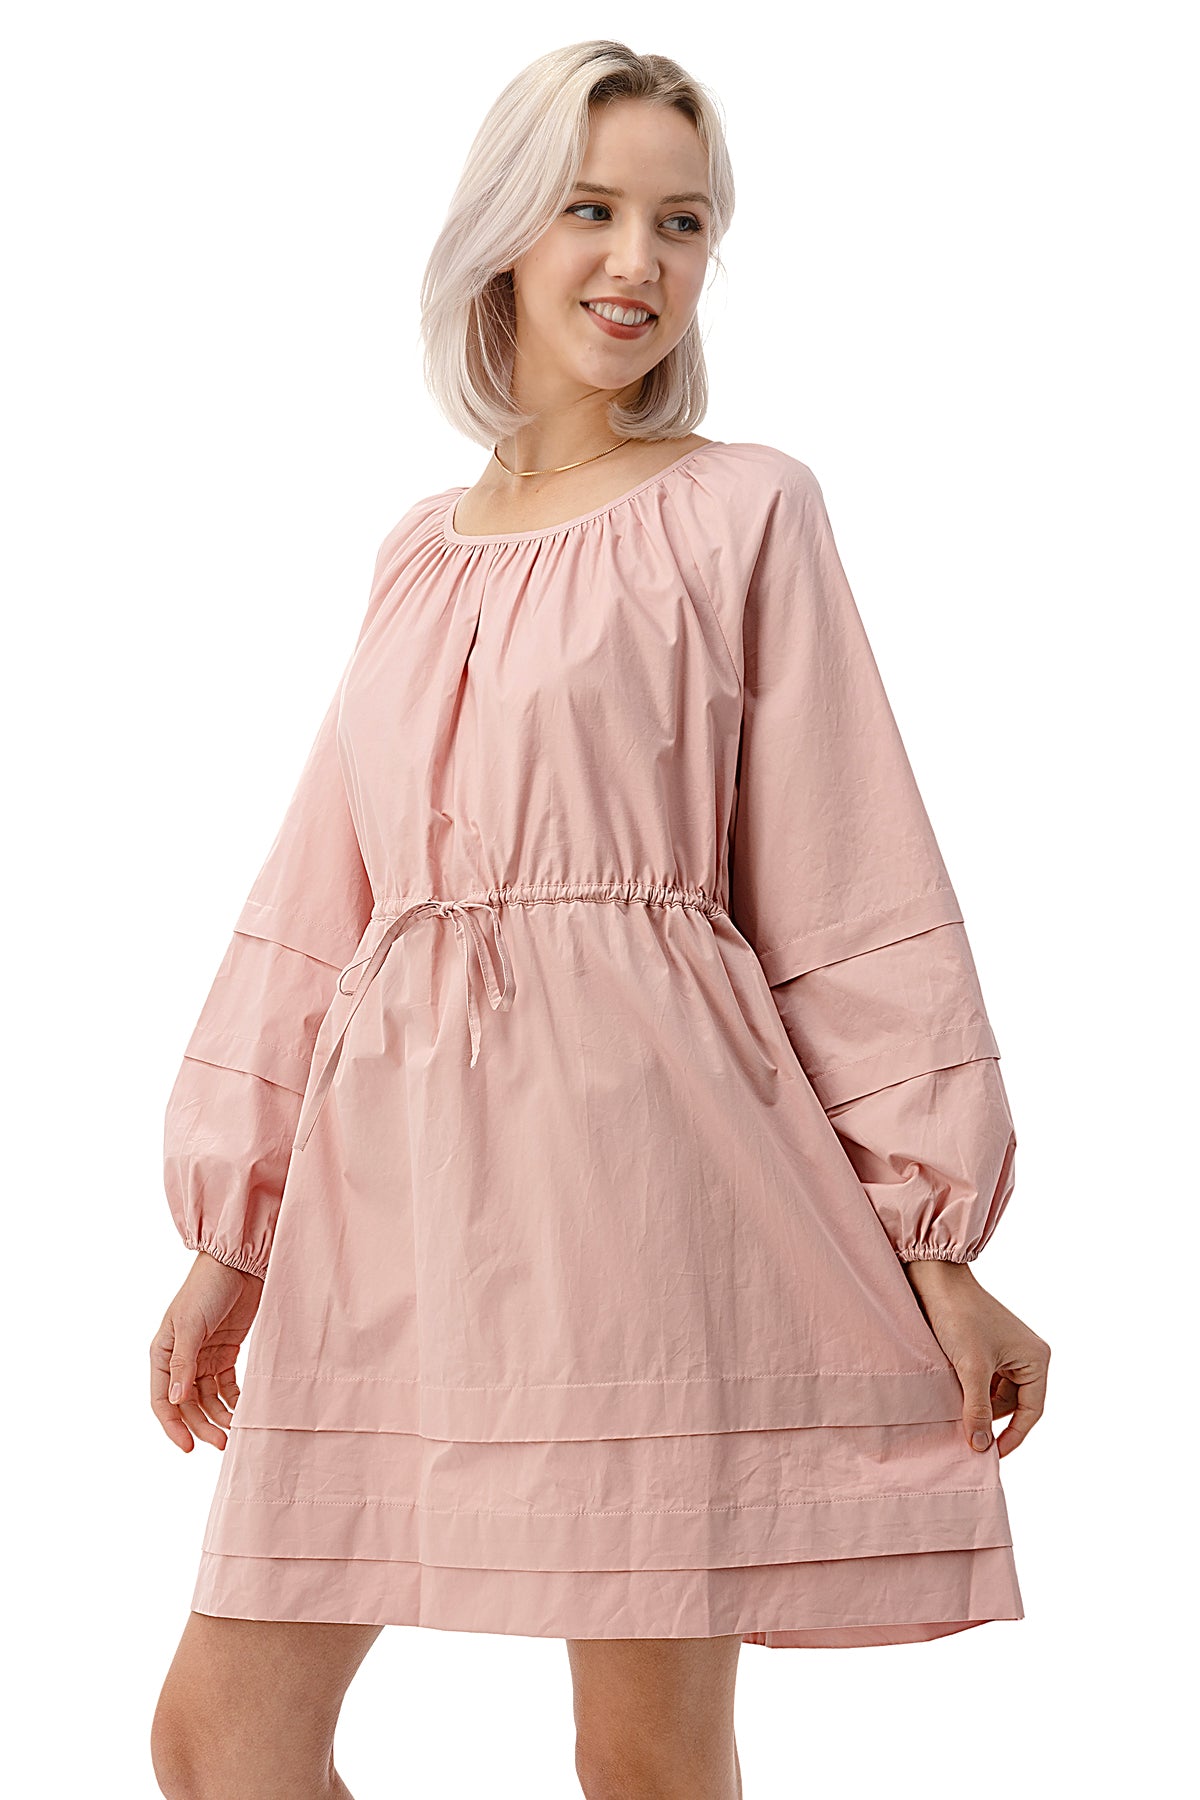 EDGY Land Girl's and Women's Round Neck Long Sleeve Tunneled Drawstring Trendy Mini Dress